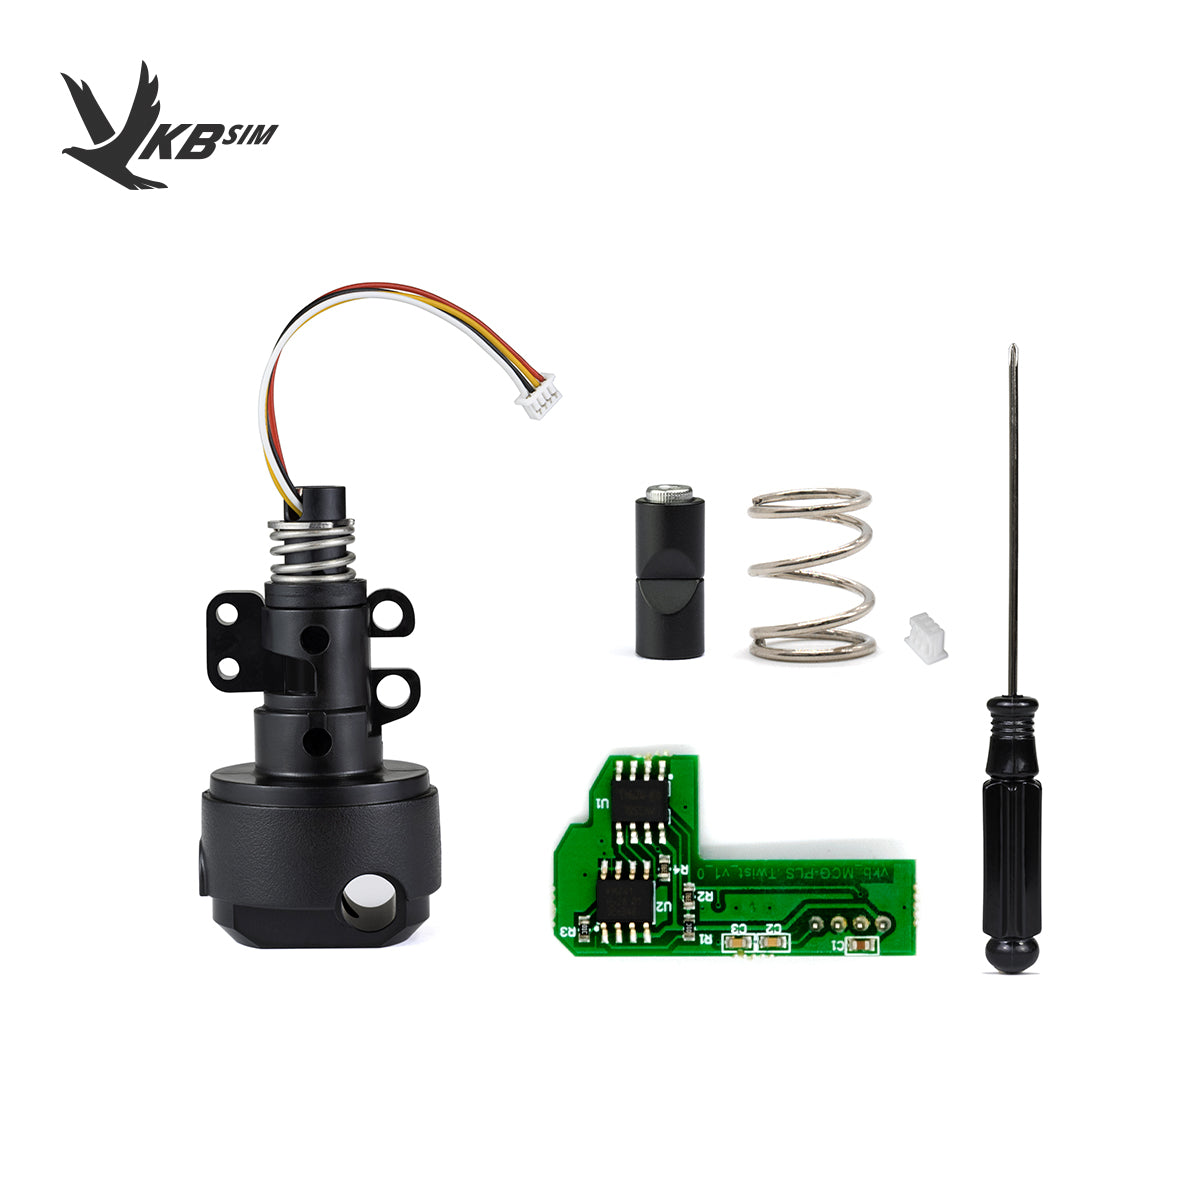 MCG Pro Grip Upgrade Kit (RevB to RevC) - with Twist Adapter